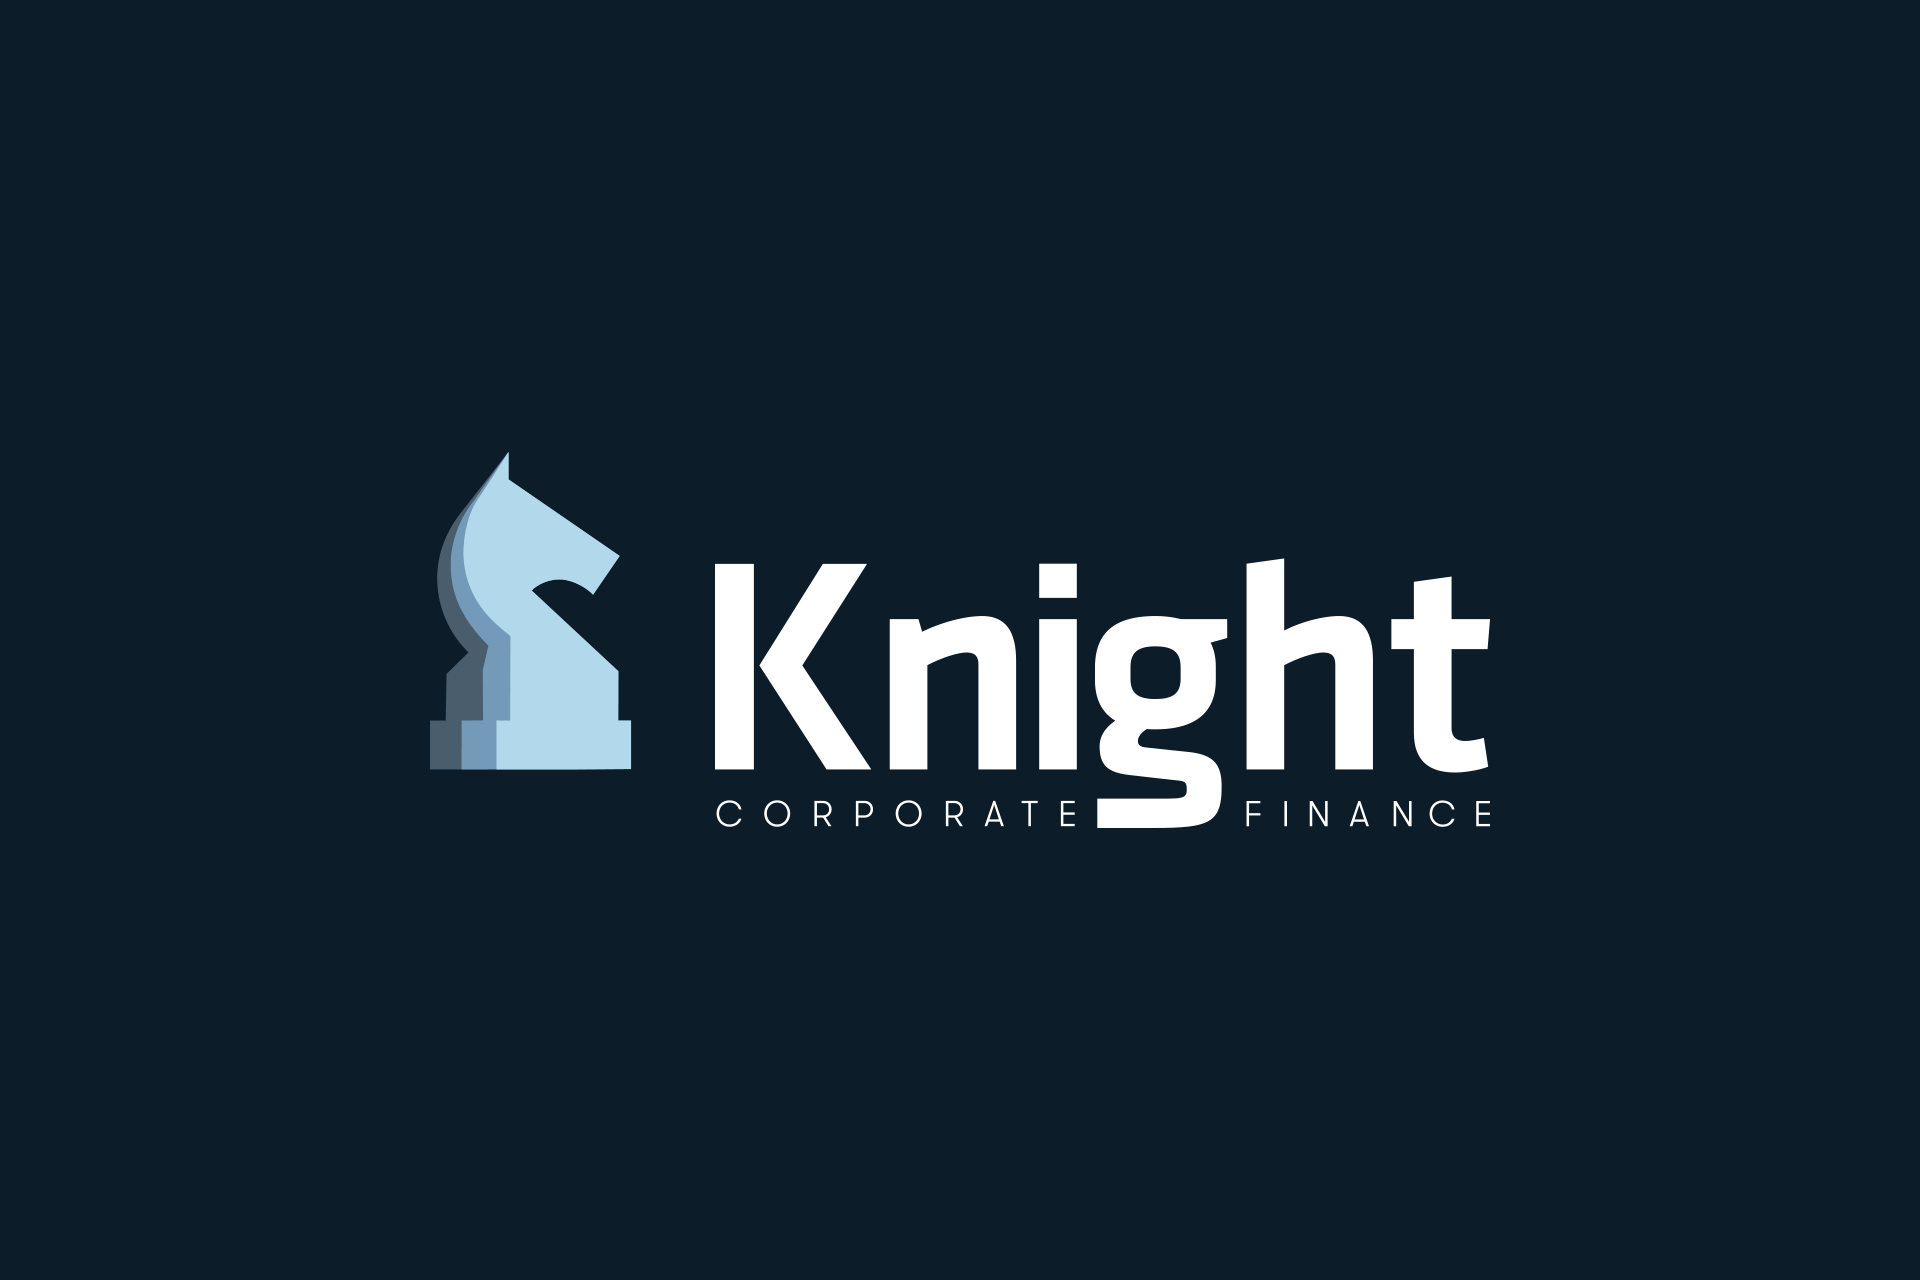 knight-corporate-finance-logo